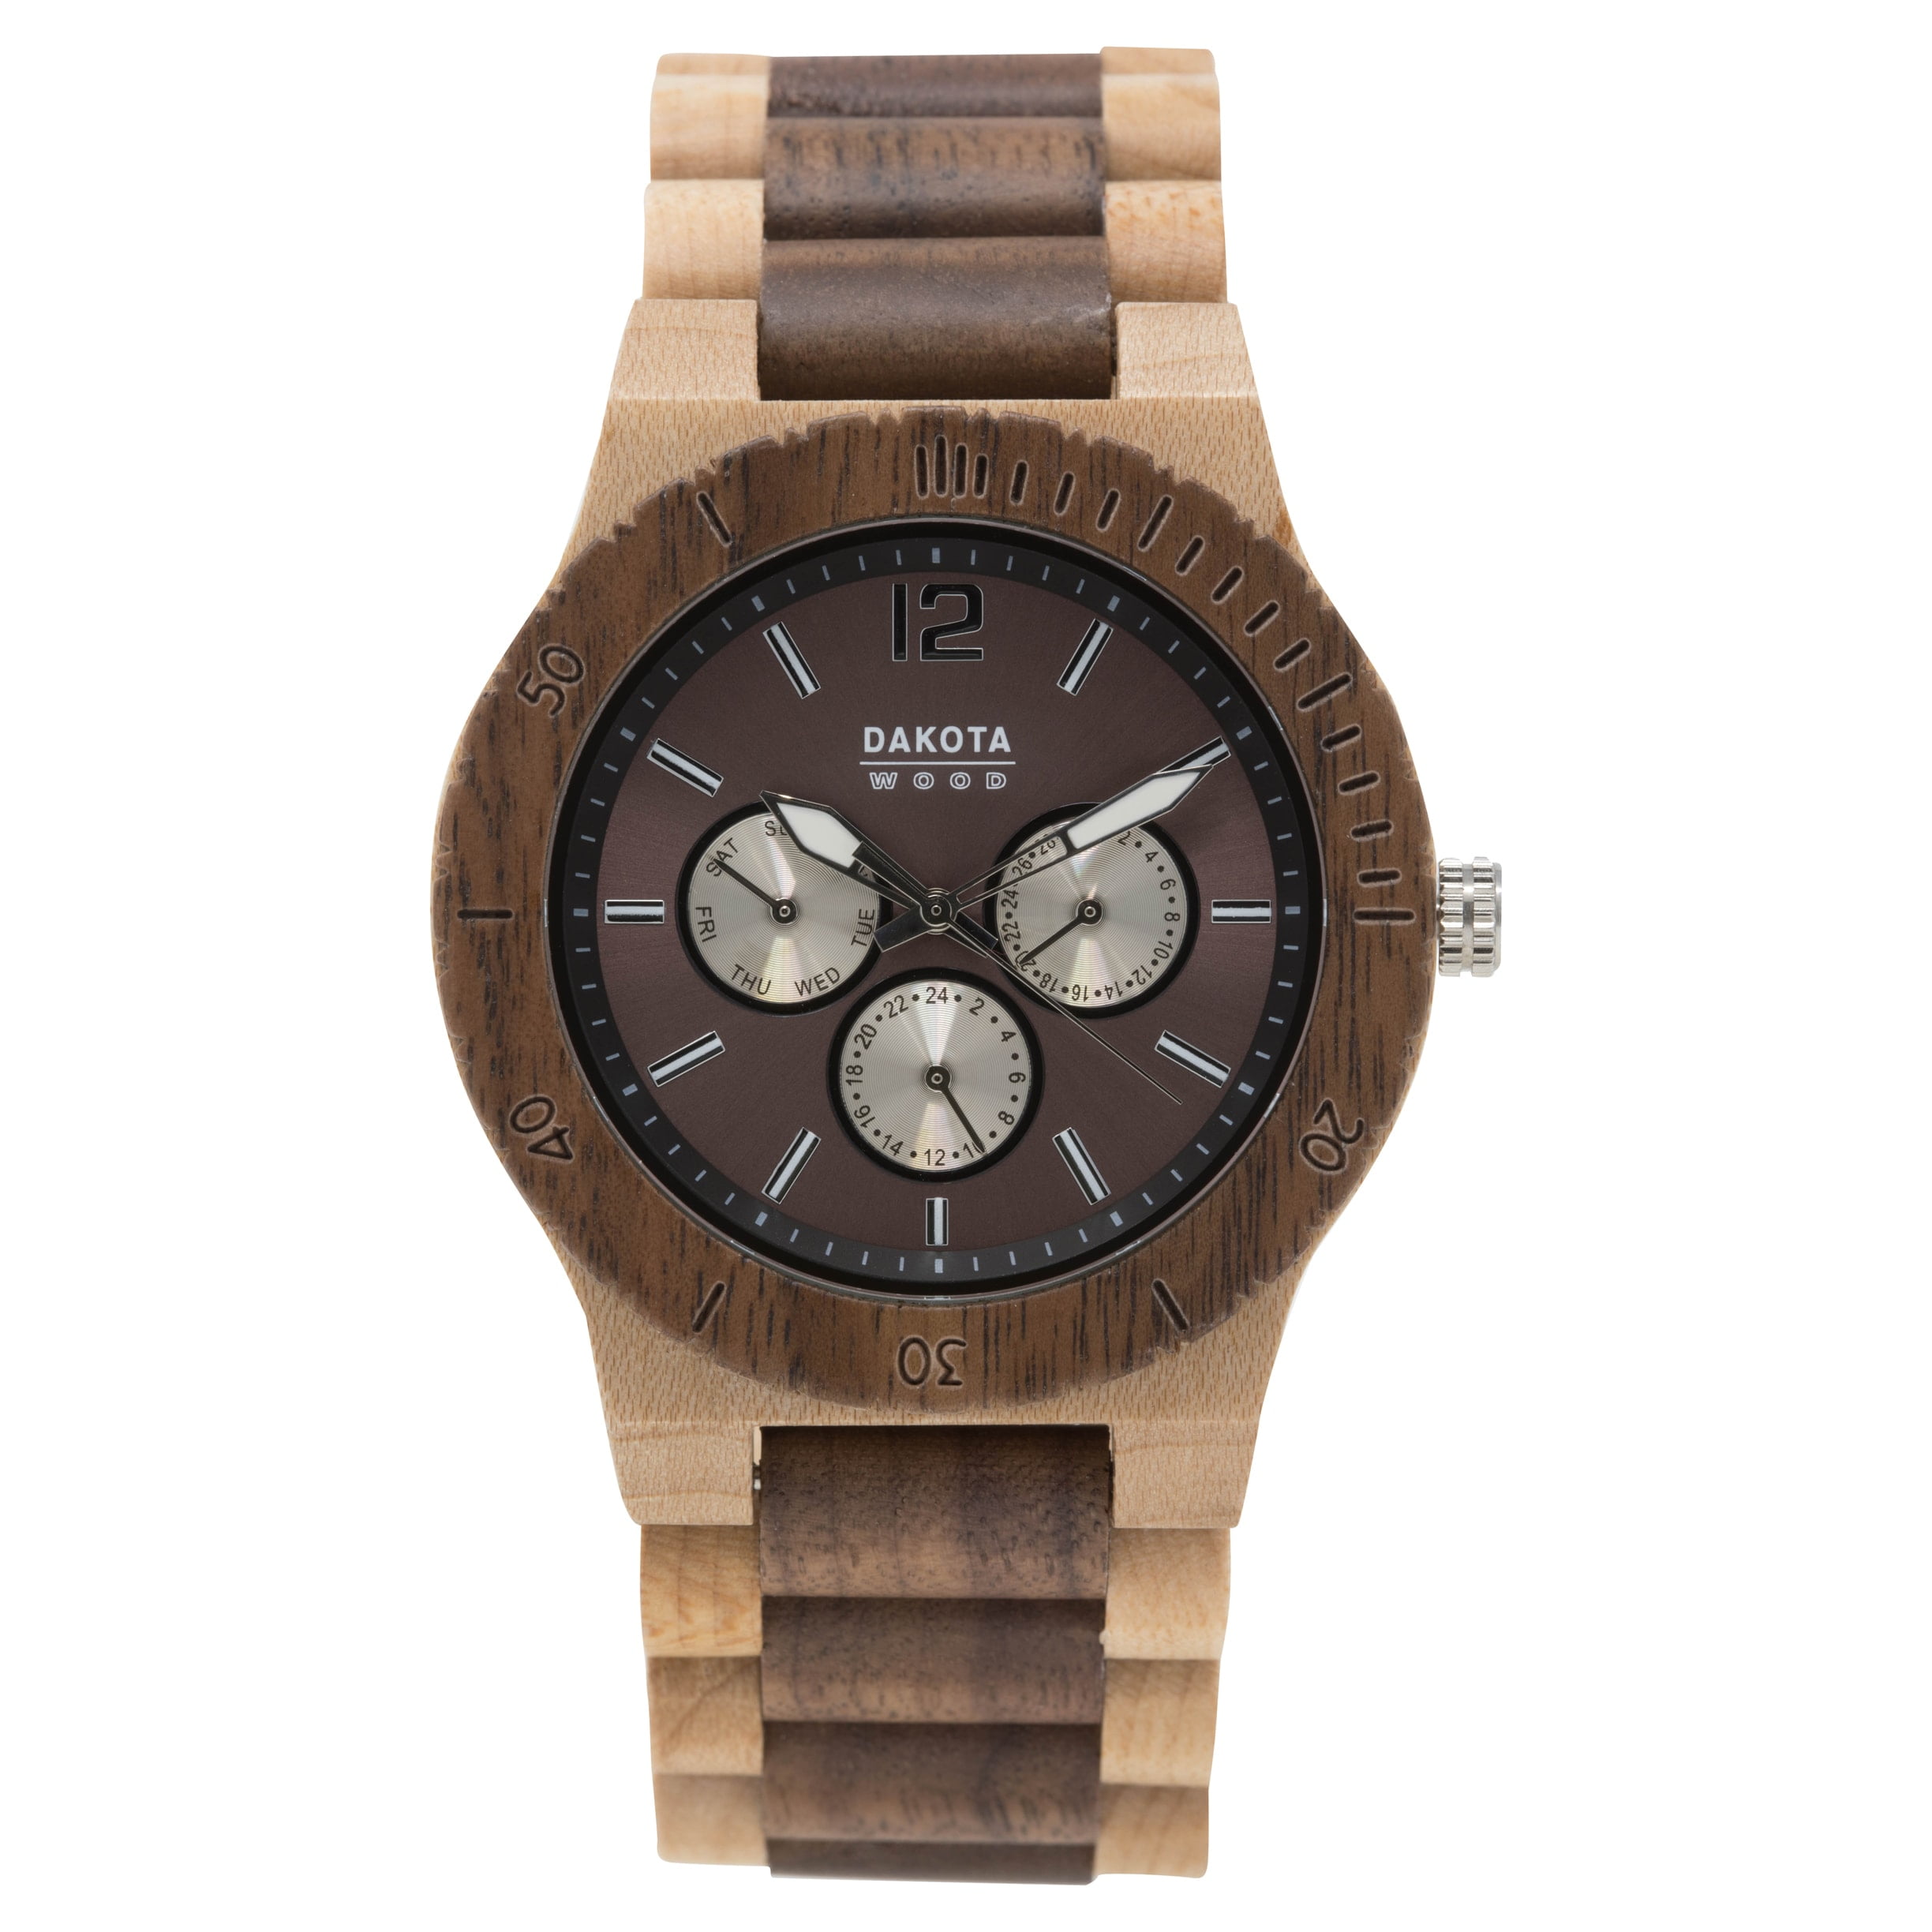 Sold at Auction: (3pc) Men's Dakota Wrist Watches w/ Case